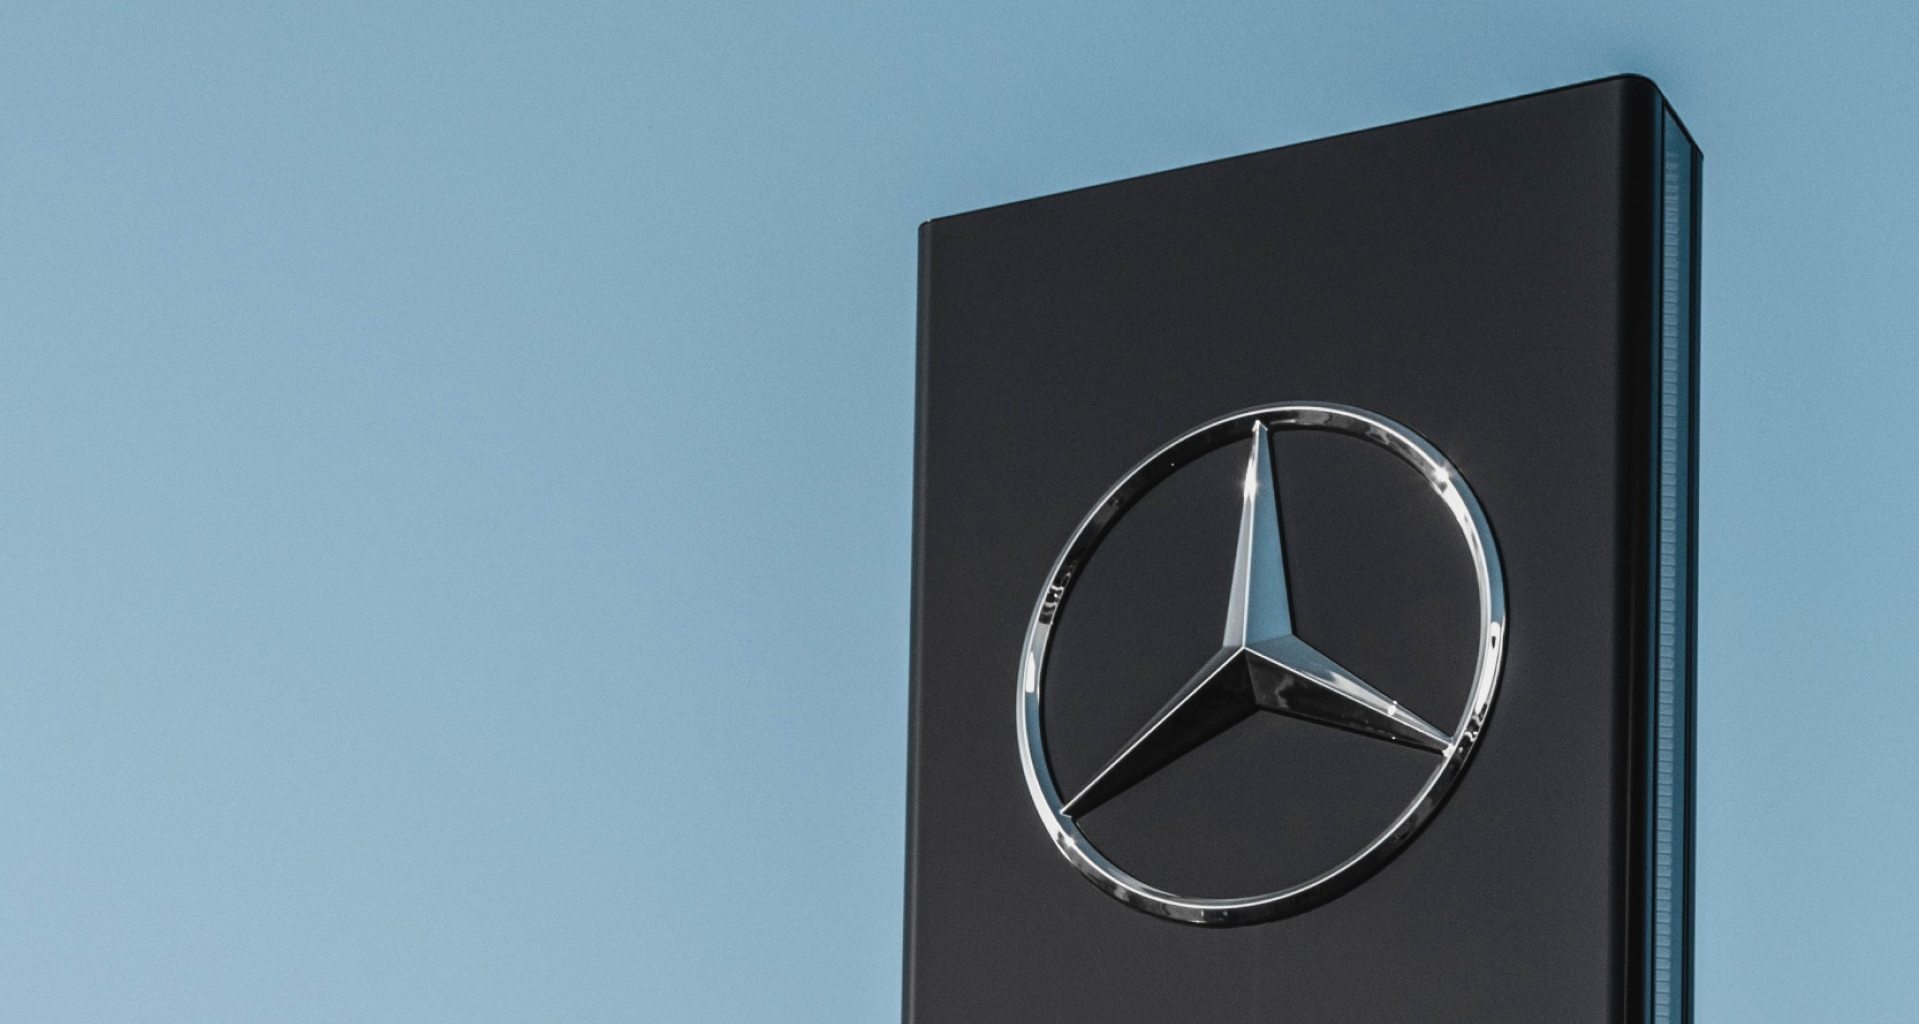 Mercedes-Benz Exterior Signage Image